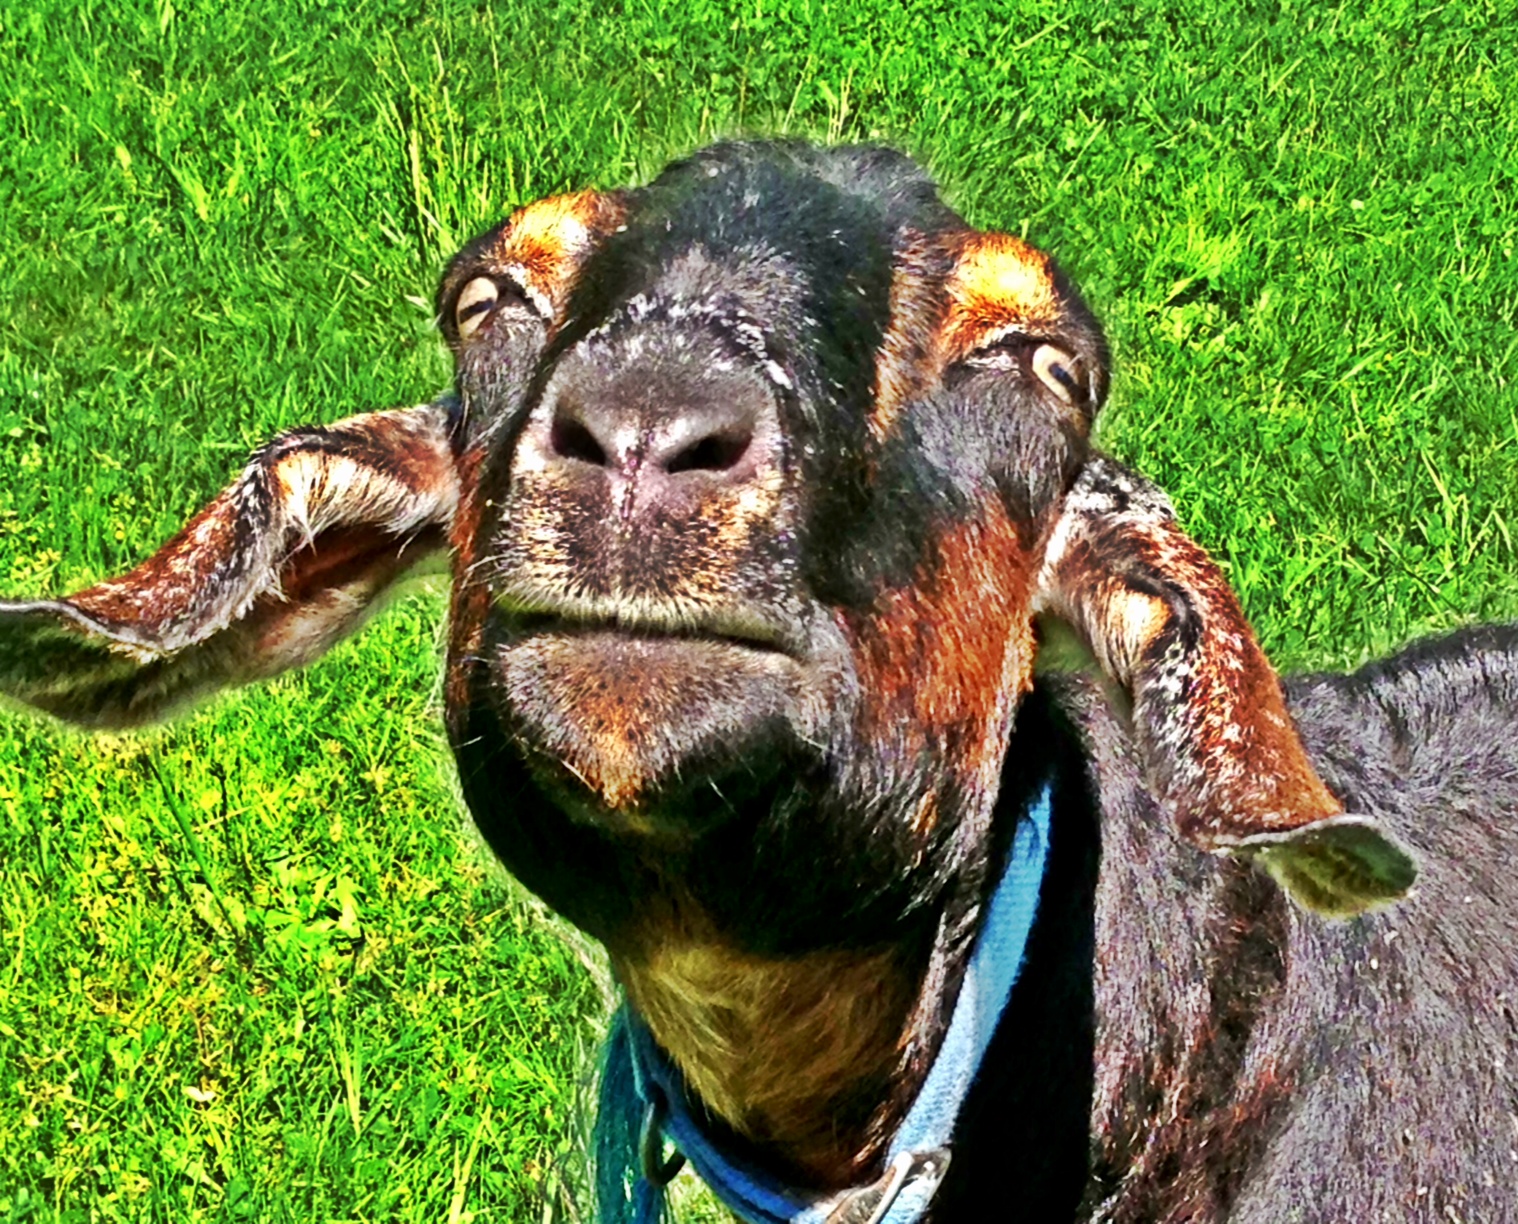 Earl, my inquisitive goat buddy!